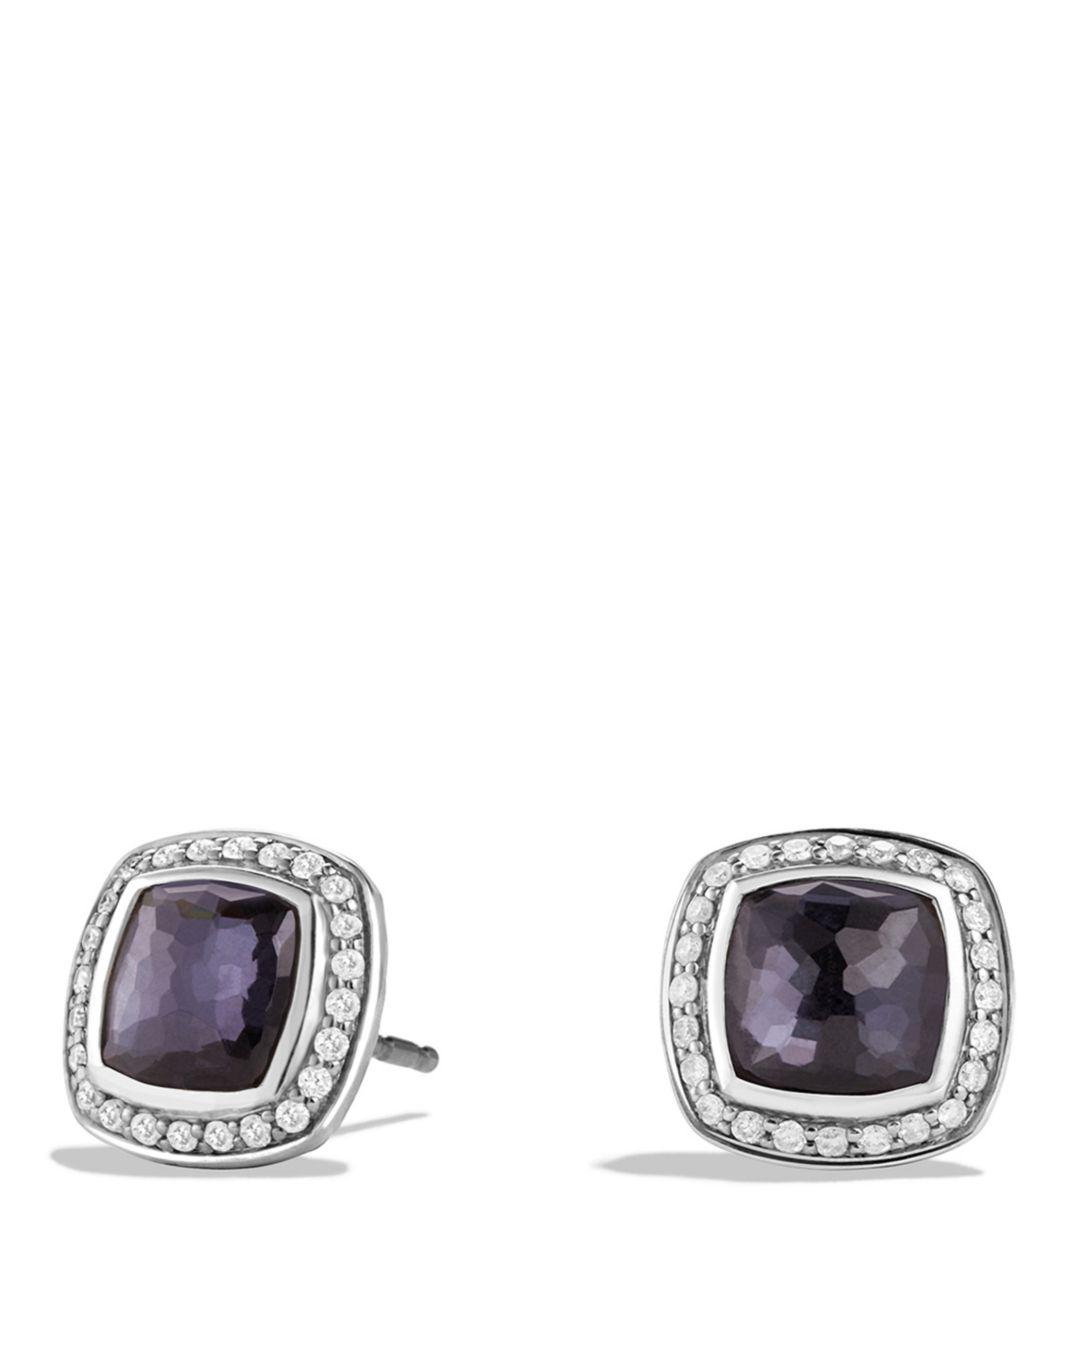 David Yurman 'albion' Earrings With Semiprecious Stone And Diamonds in ...